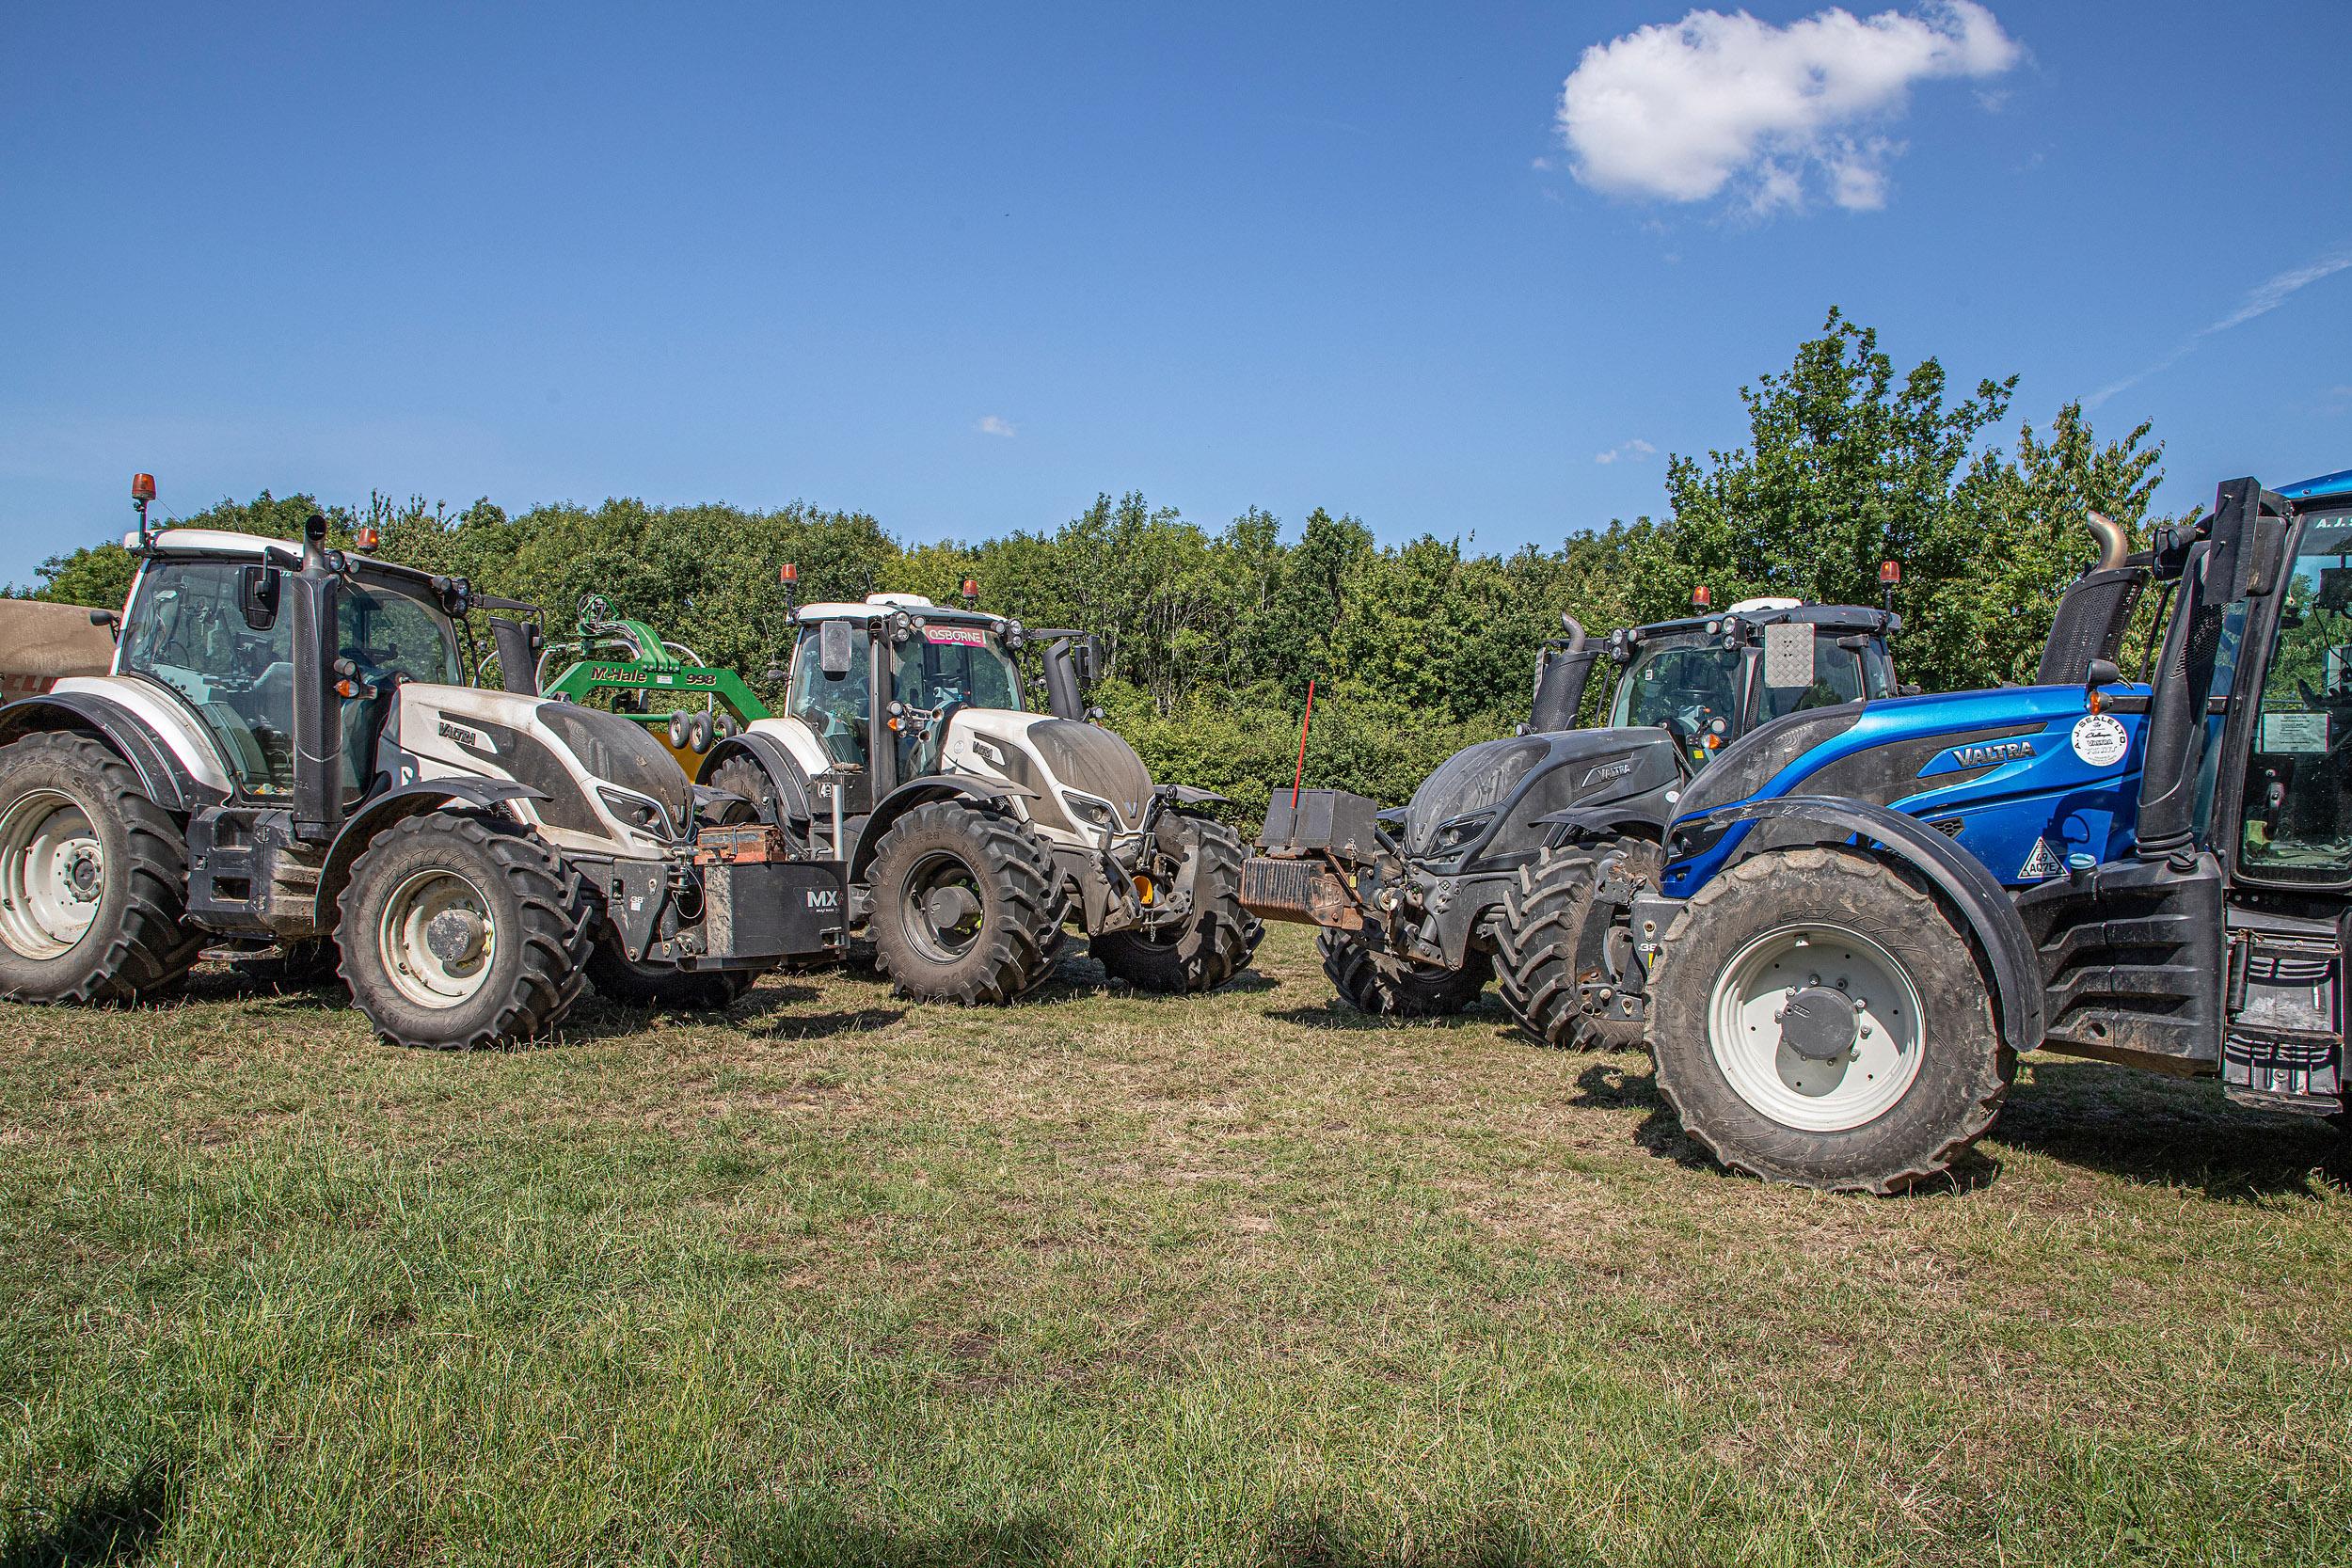 In just five years, S&J osborne’s tractor fleet has gained four Valtras.